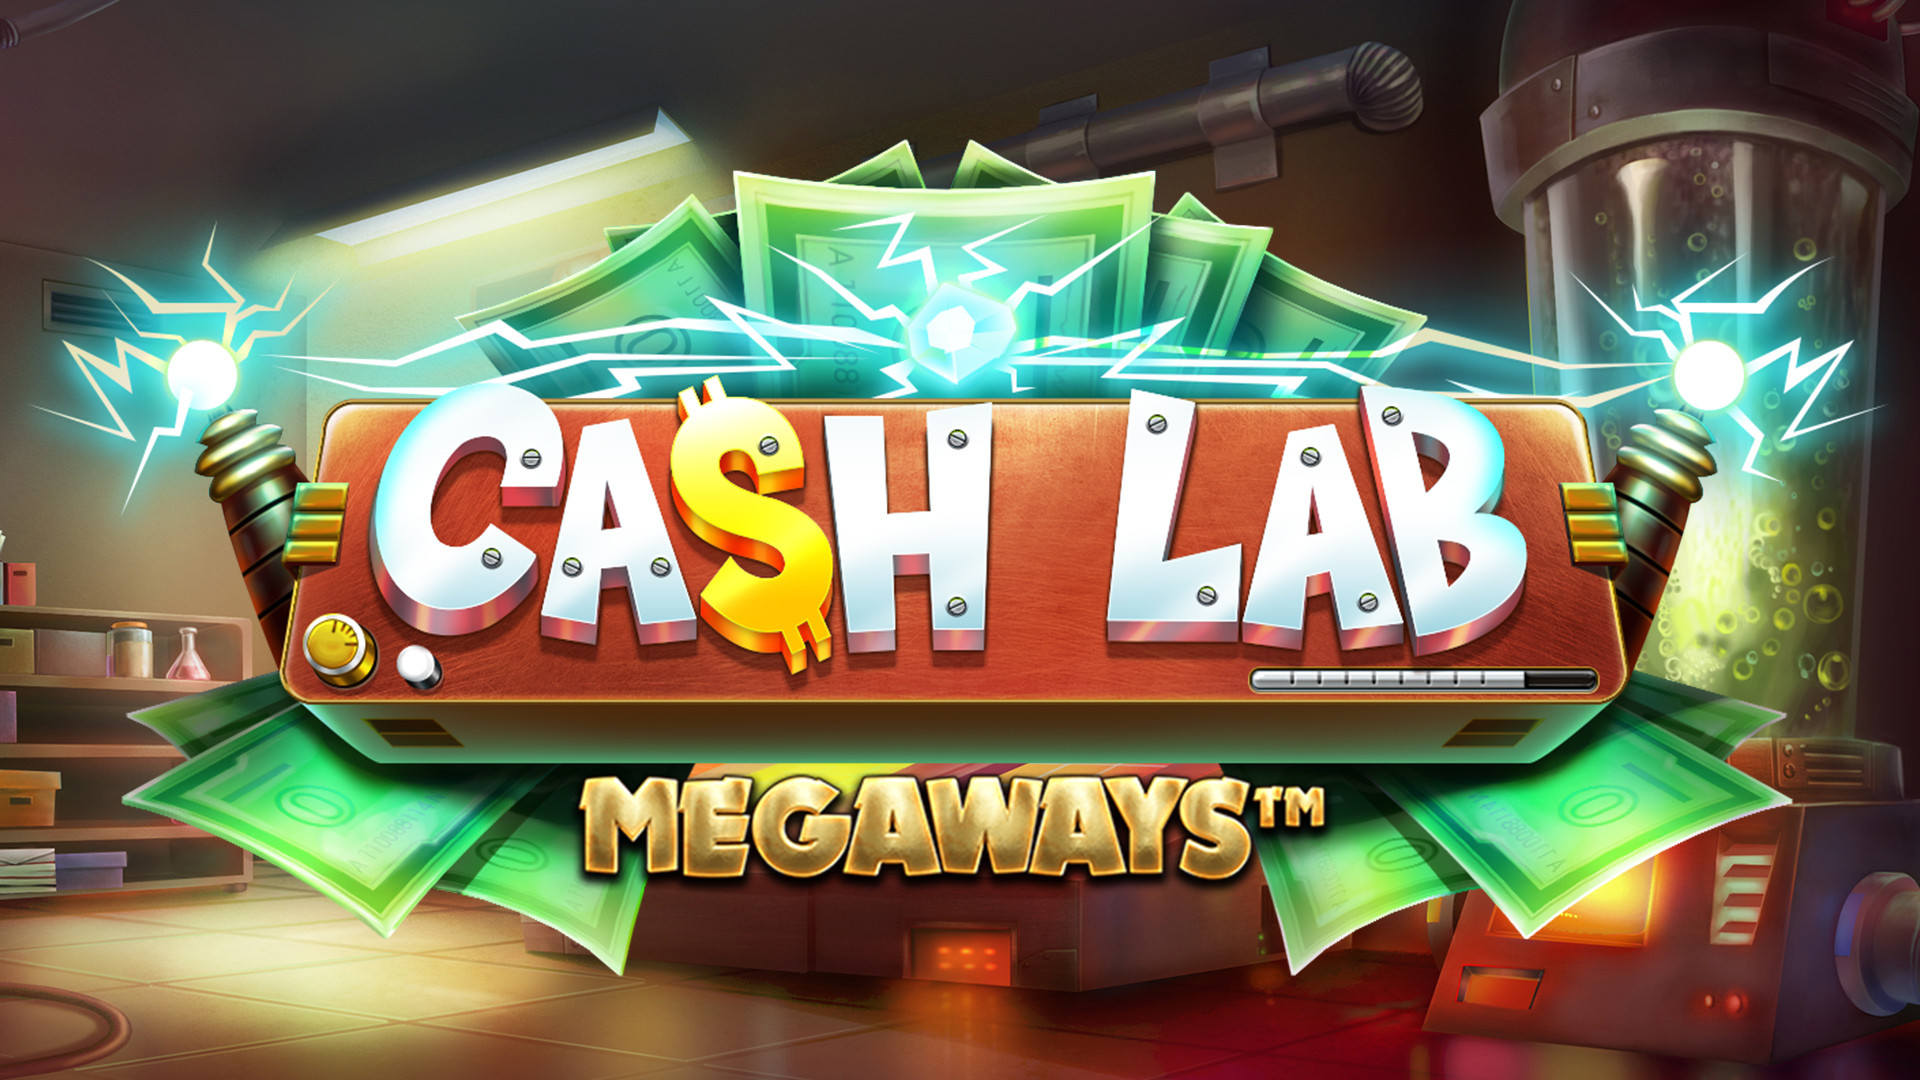 Cash Lab MEGAWAYS